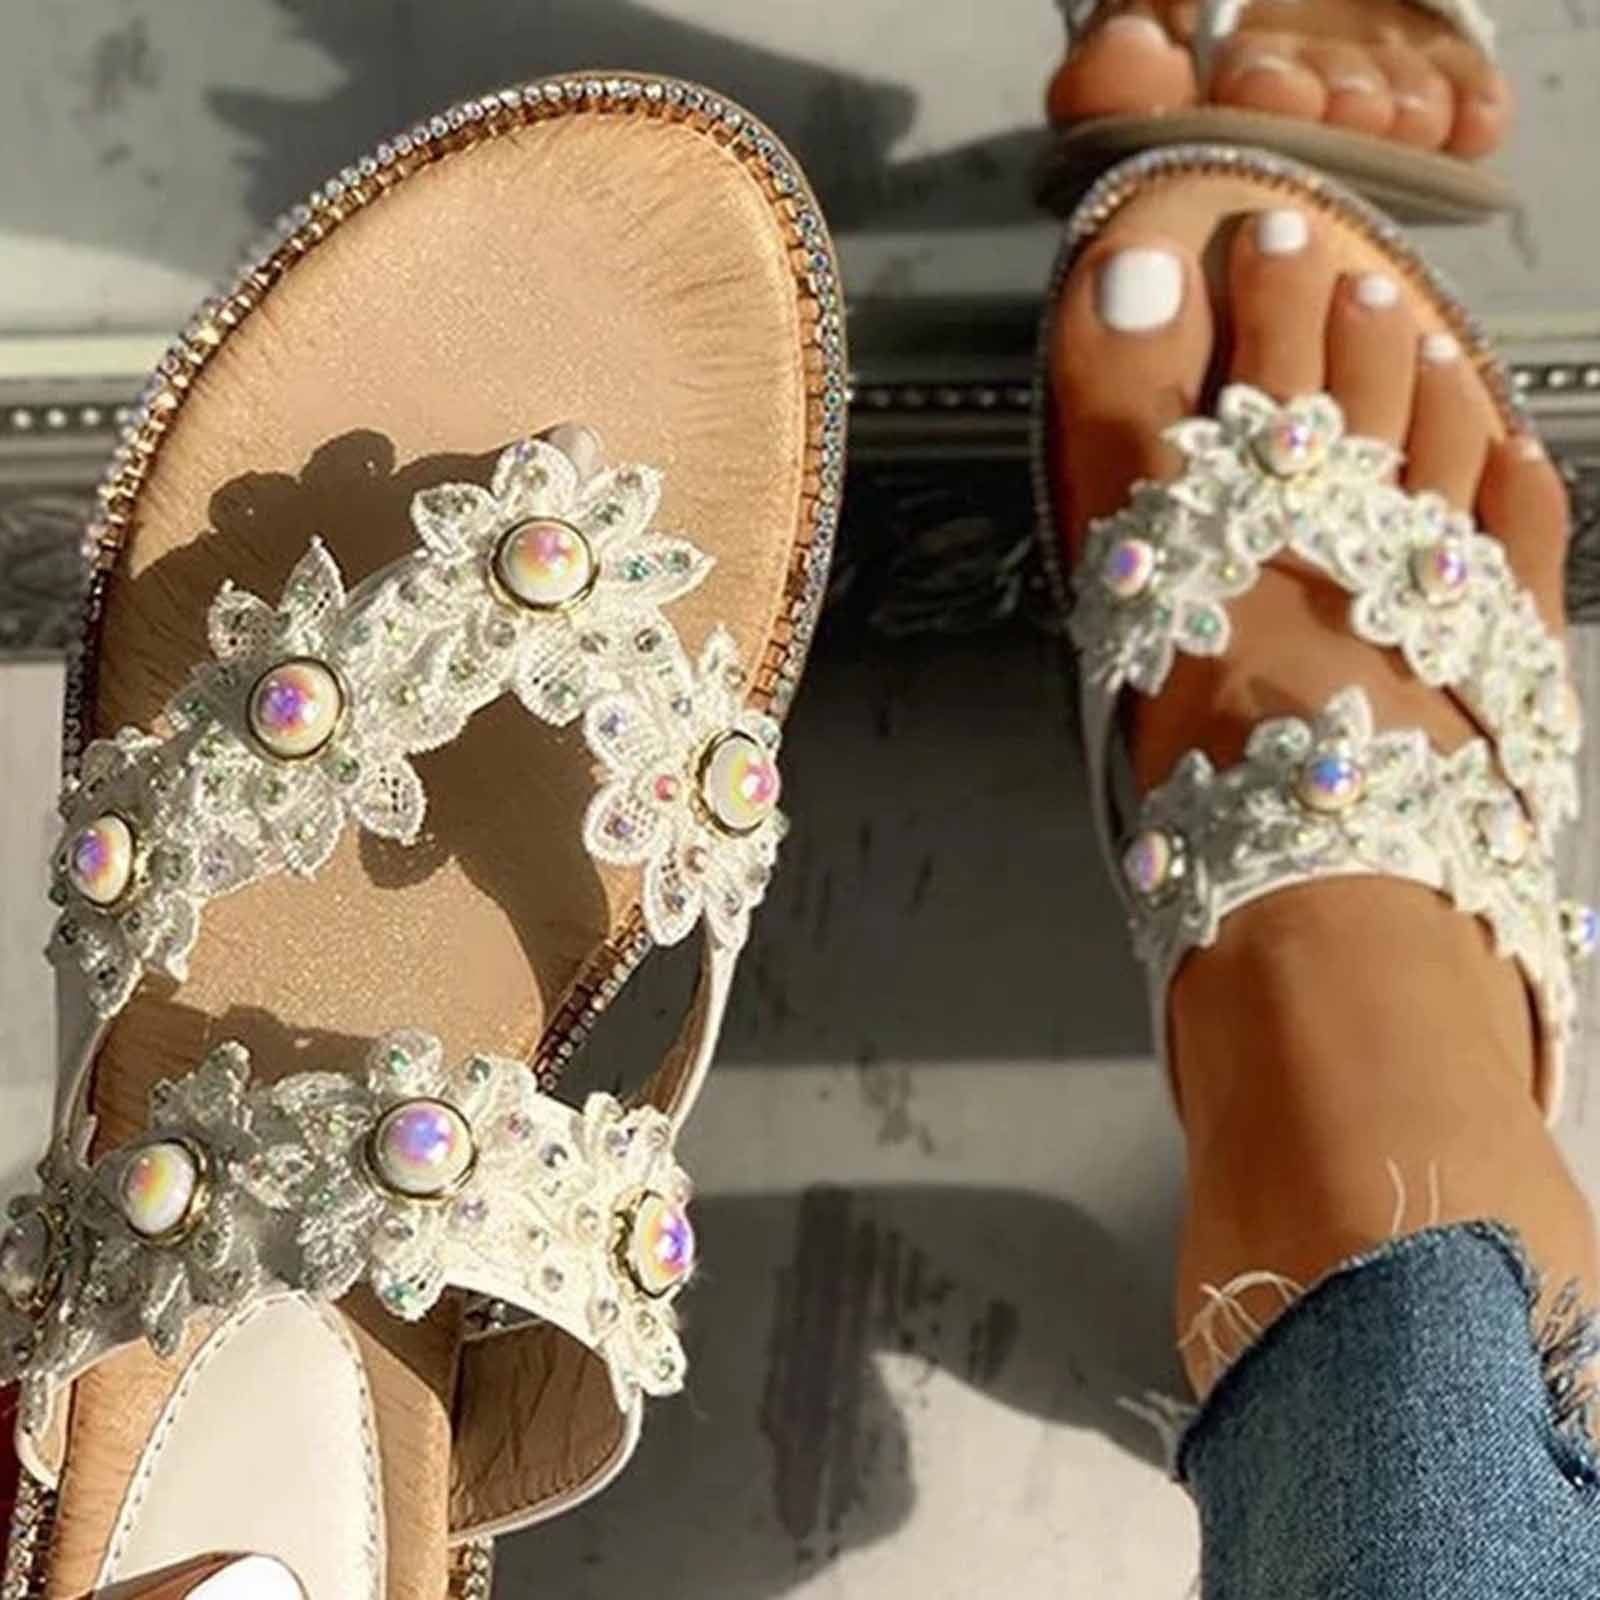 Castore jeweled sandals fucsia